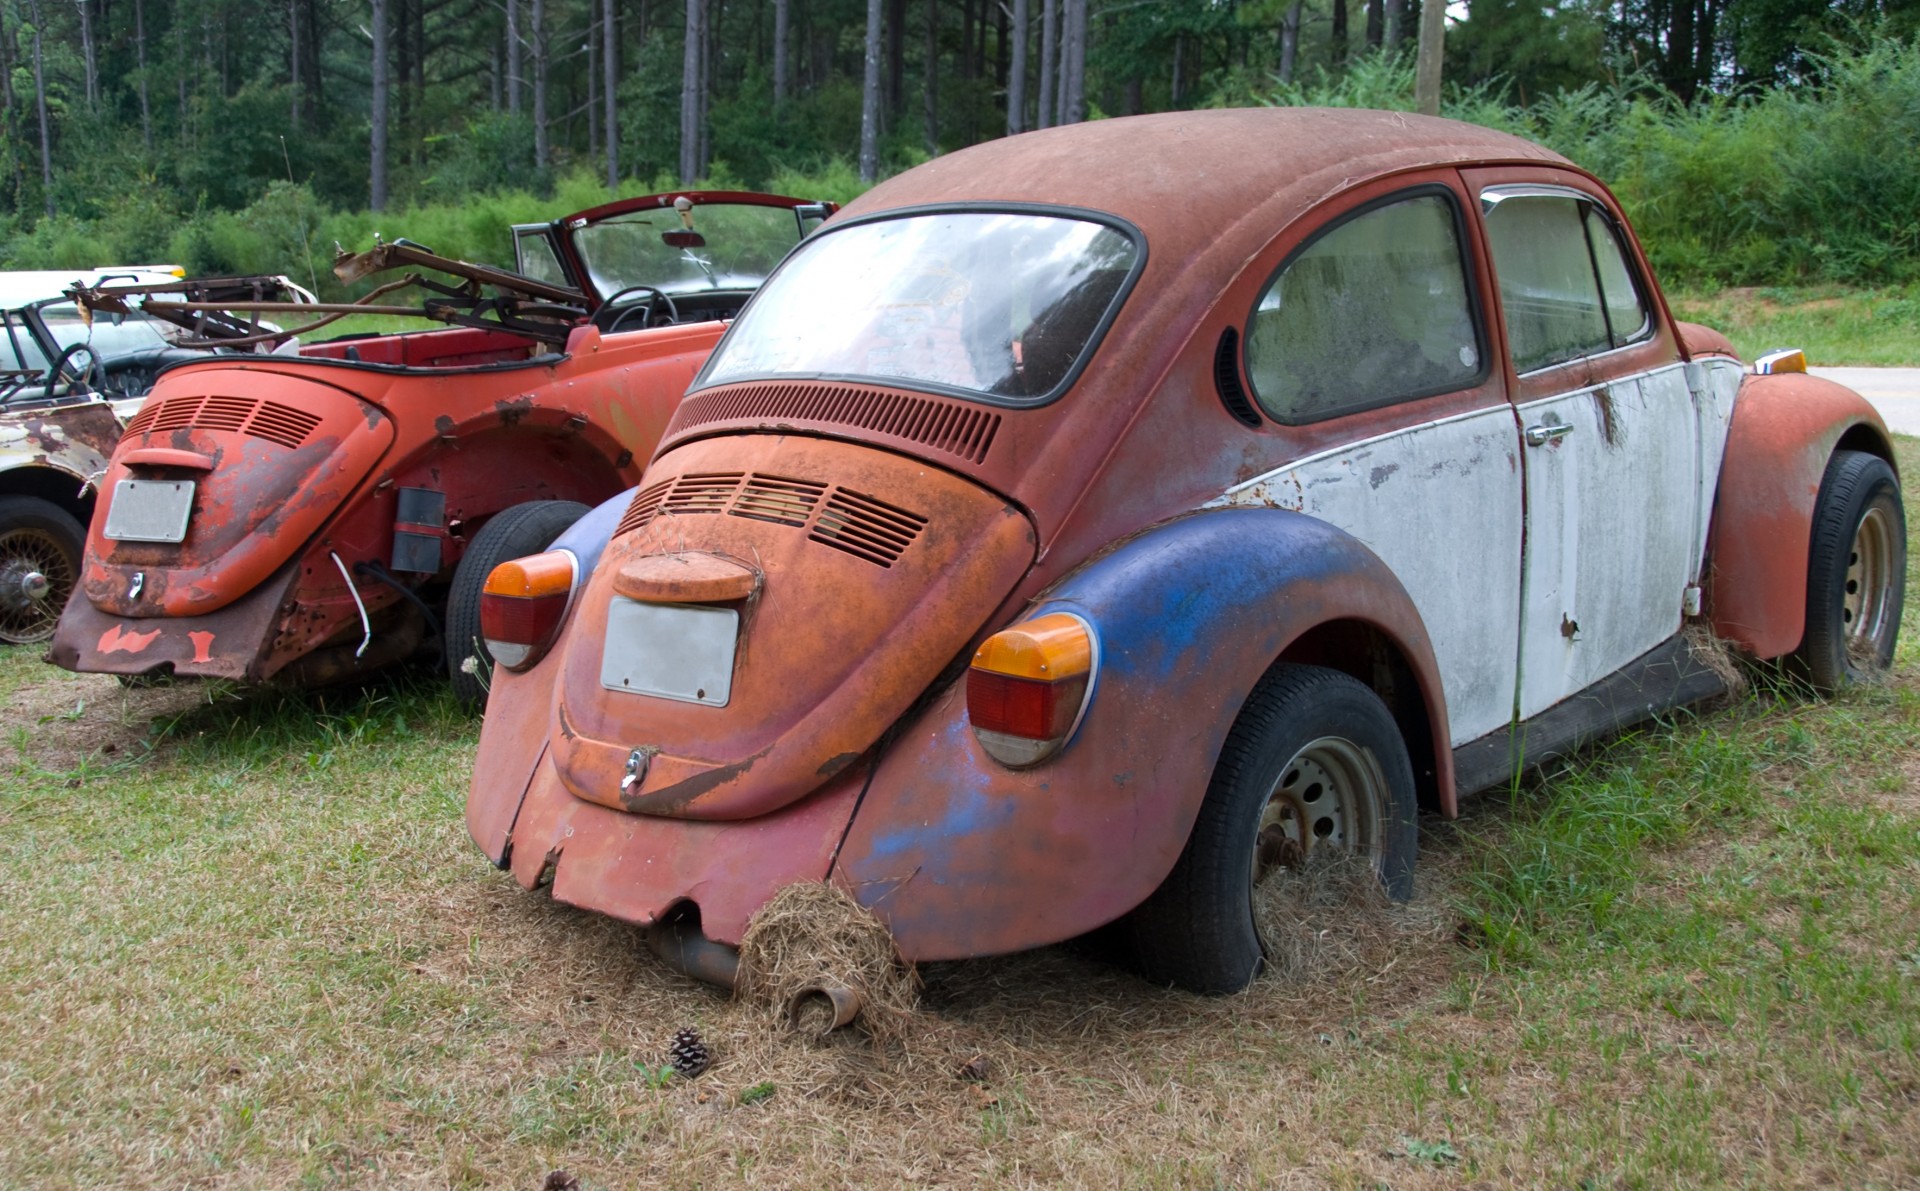 Rustic old Volkswagen cars junked